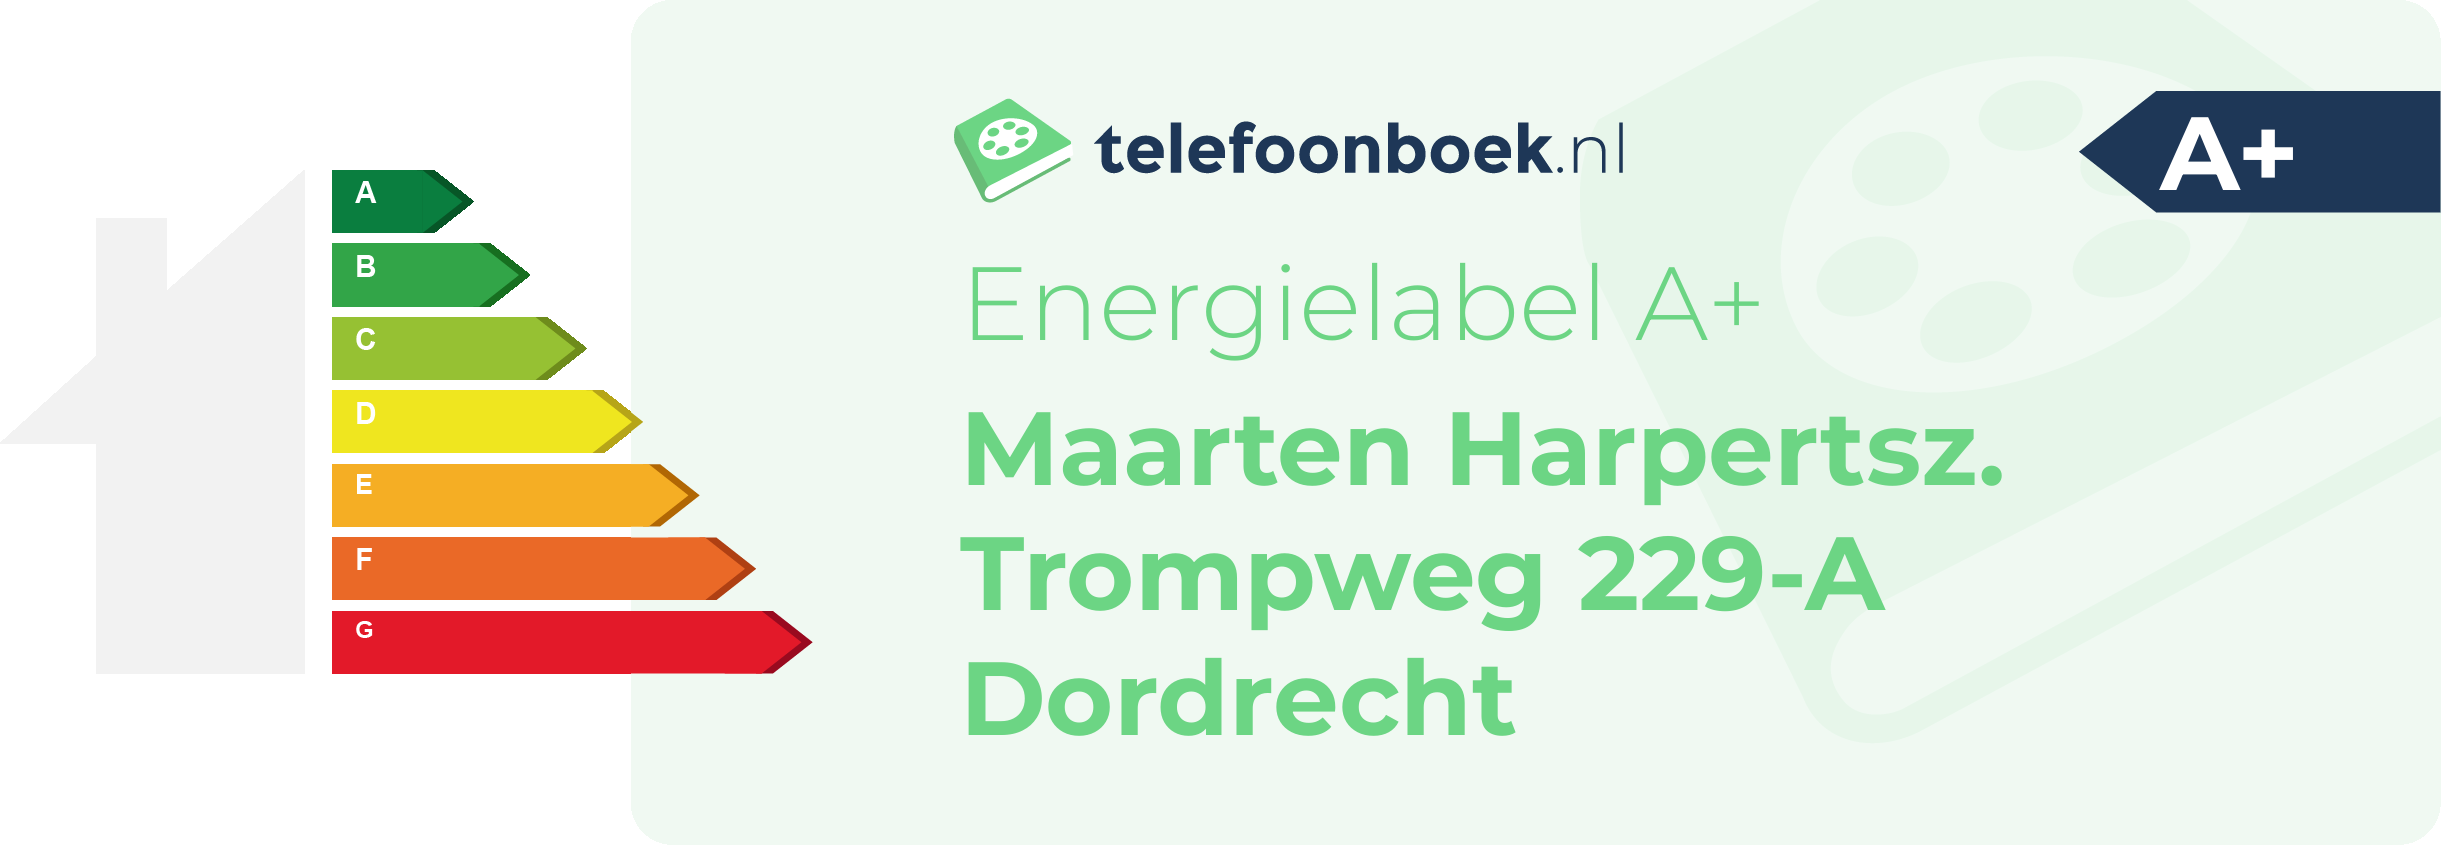 Energielabel Maarten Harpertsz. Trompweg 229-A Dordrecht